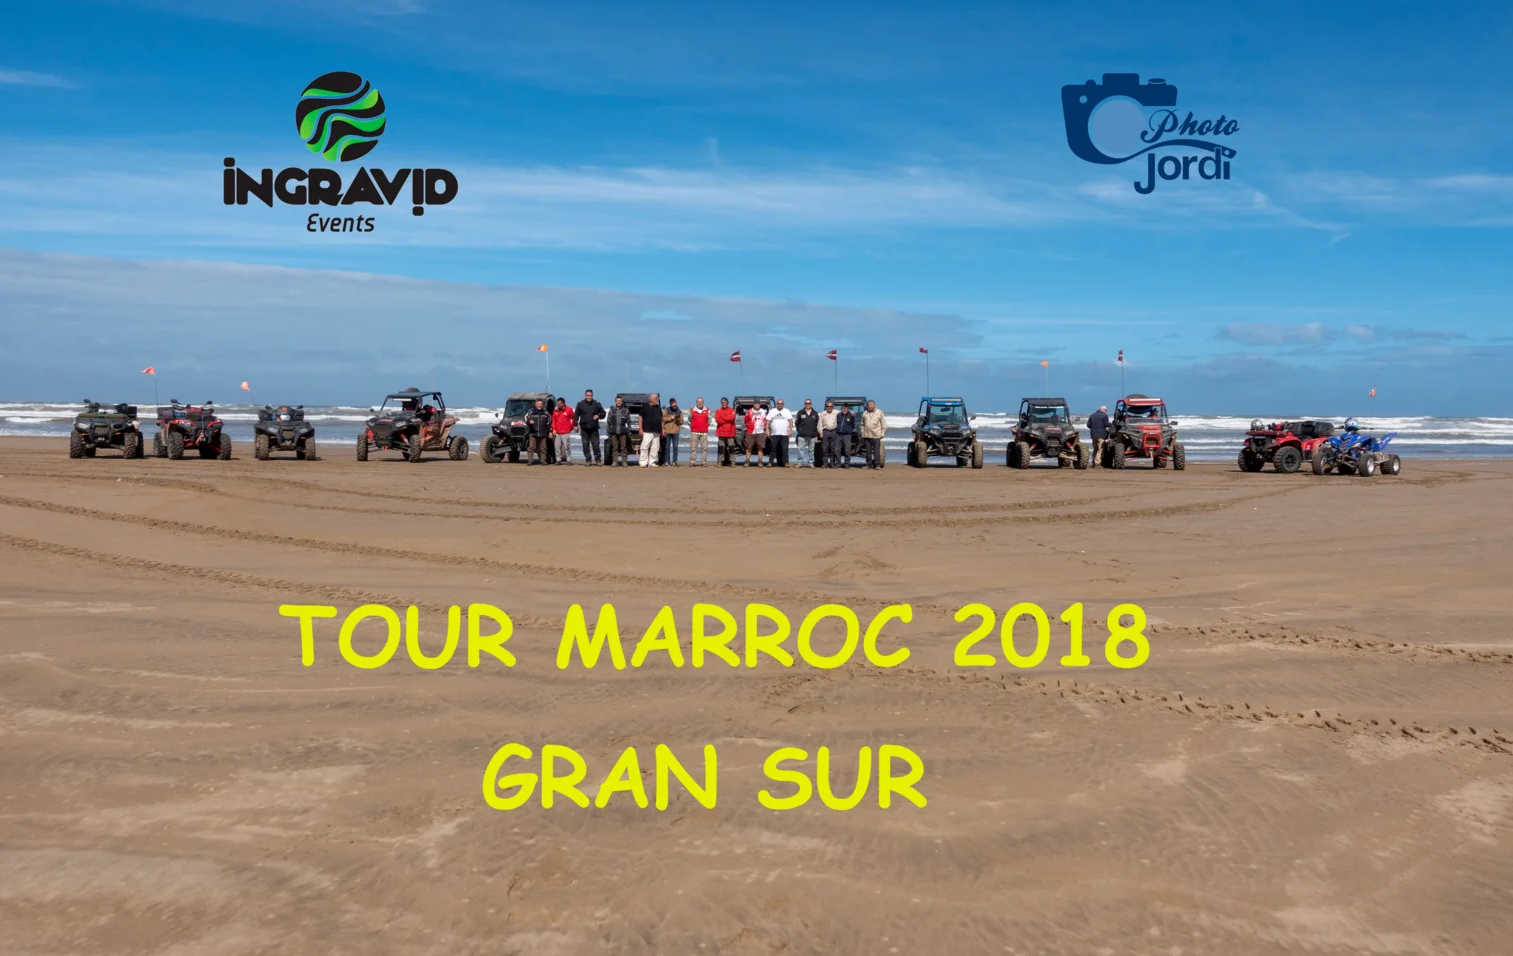 INGRAVID – TOUR MARROC 2018 – DRON VERSION